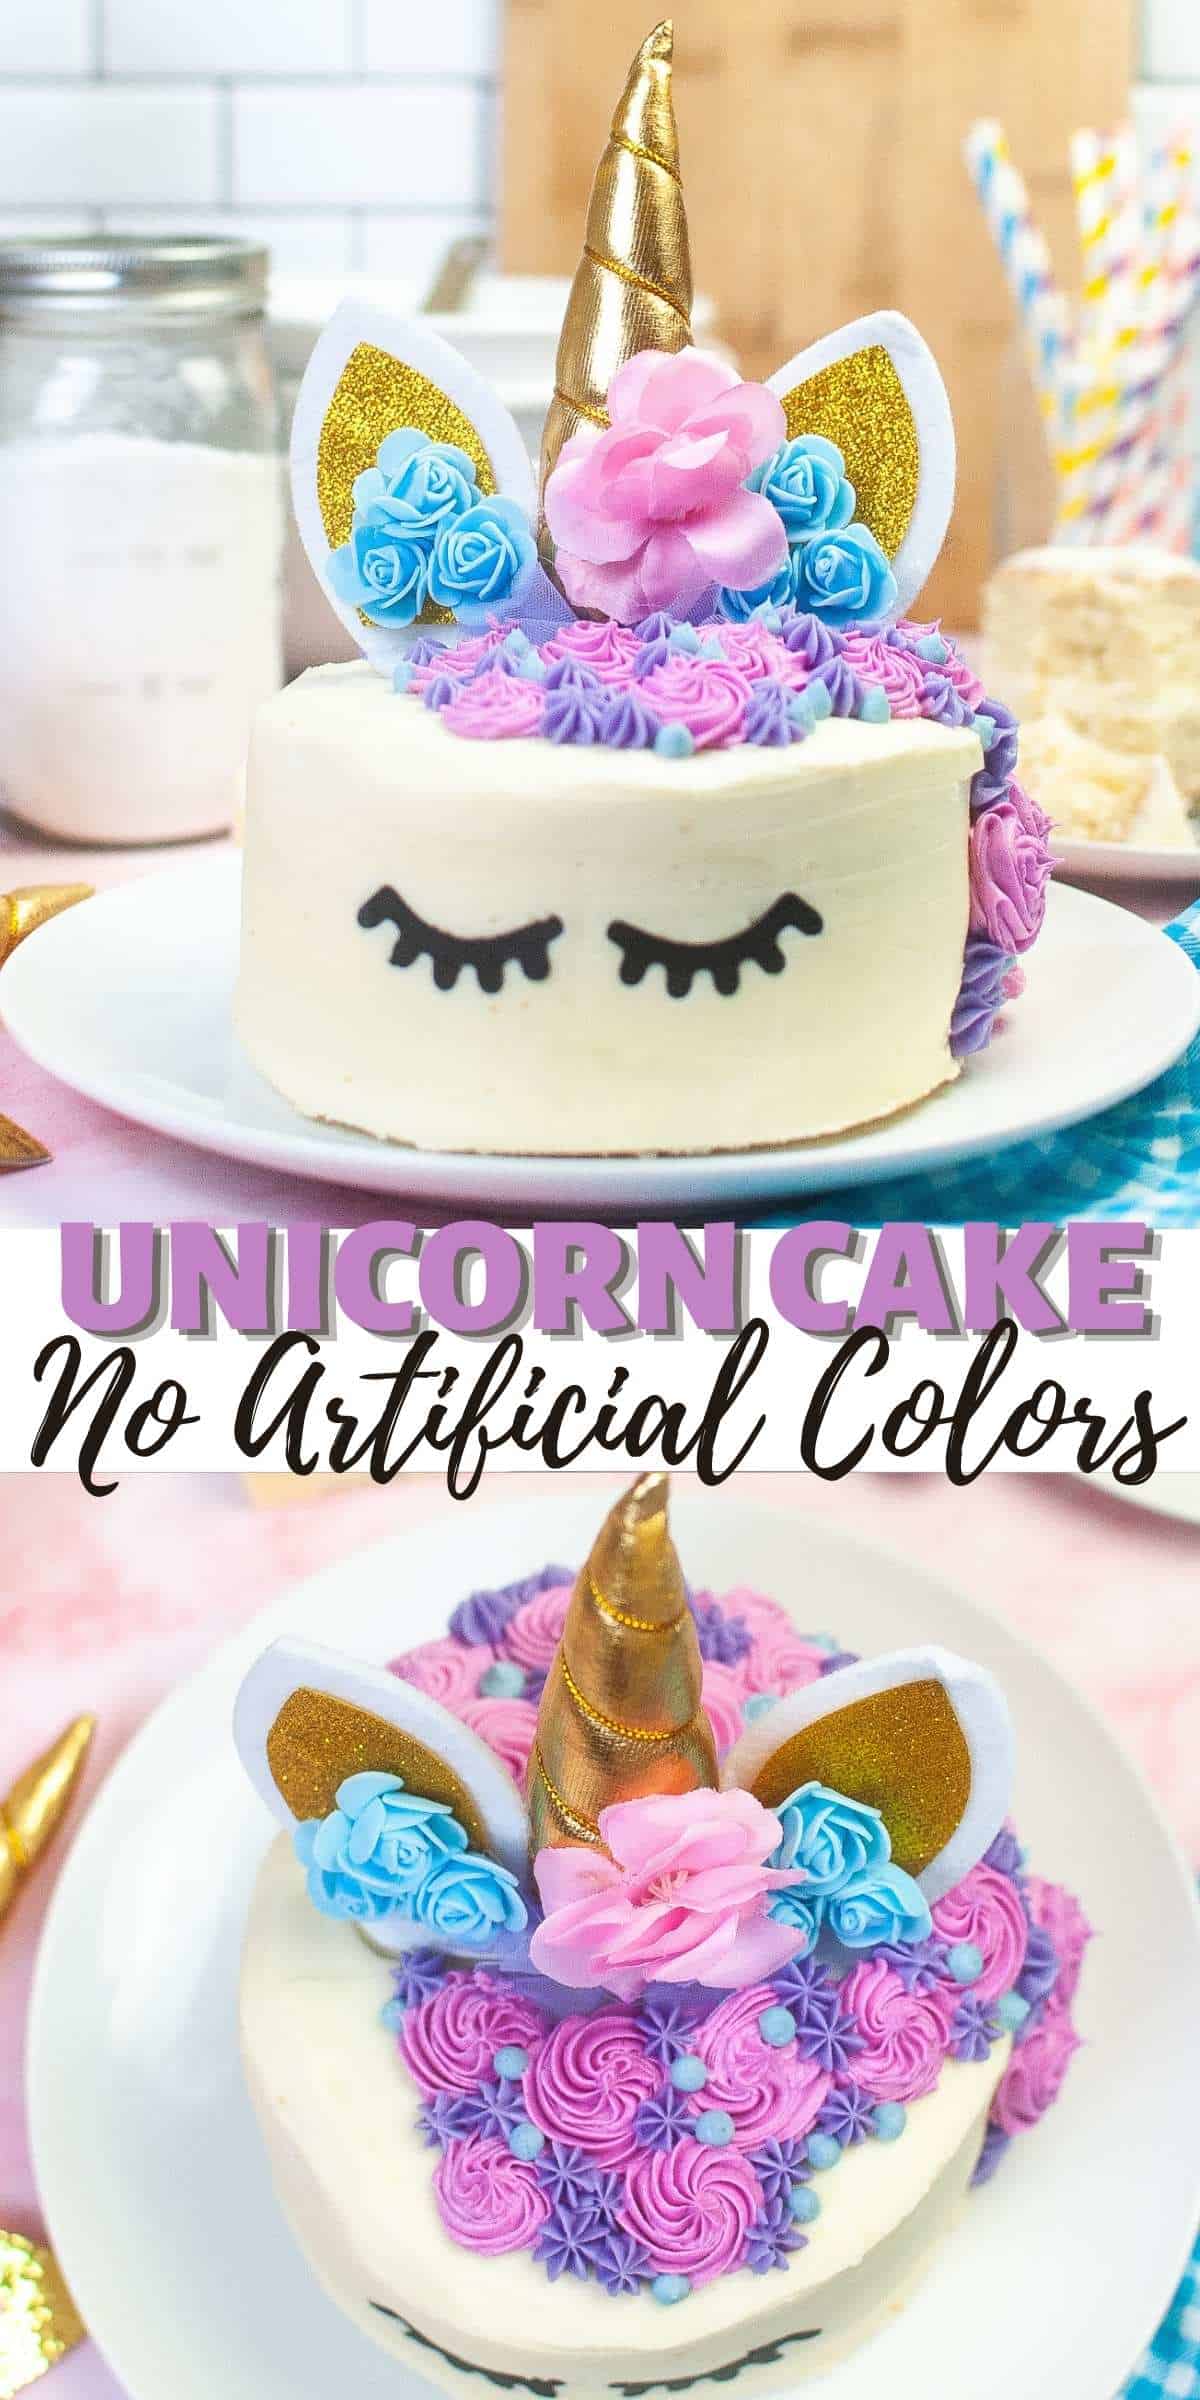 Unicorn Cake Recipe With No Artificial Colors 